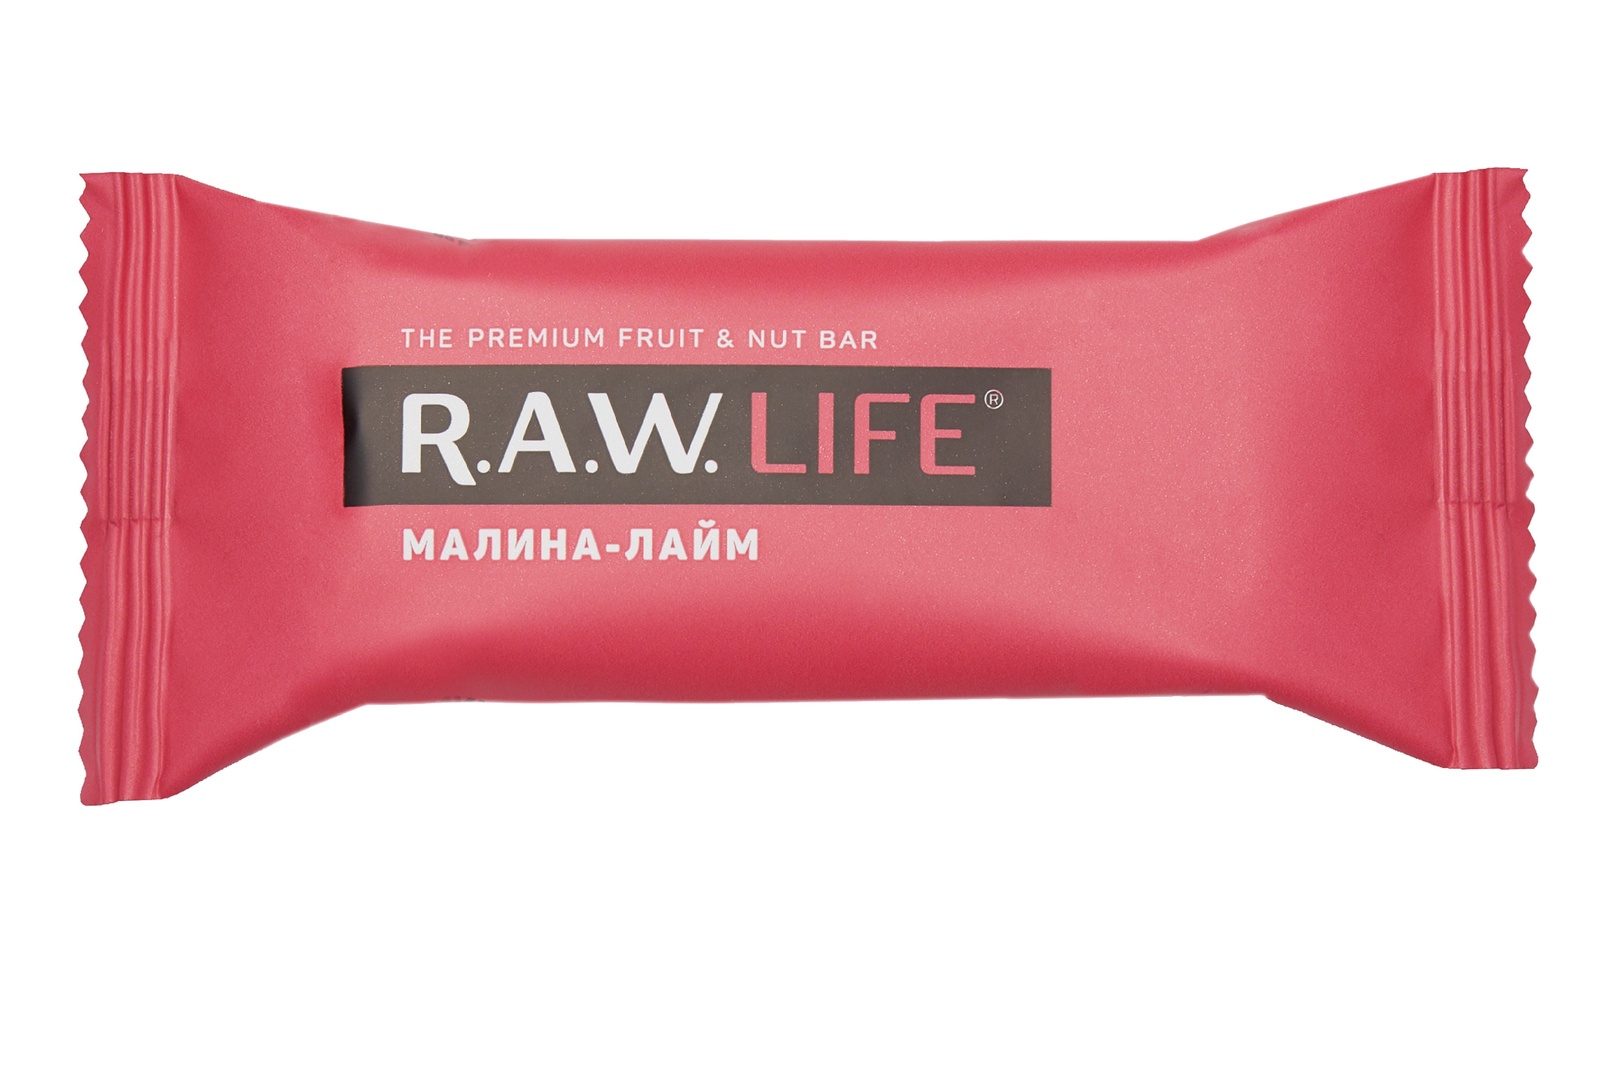 Даешь батончик купить. Батончик "малина-лайм" (47 г). R.A.W. Life батончики. Raw Life батончики. Raw Life батончики малина лайм.